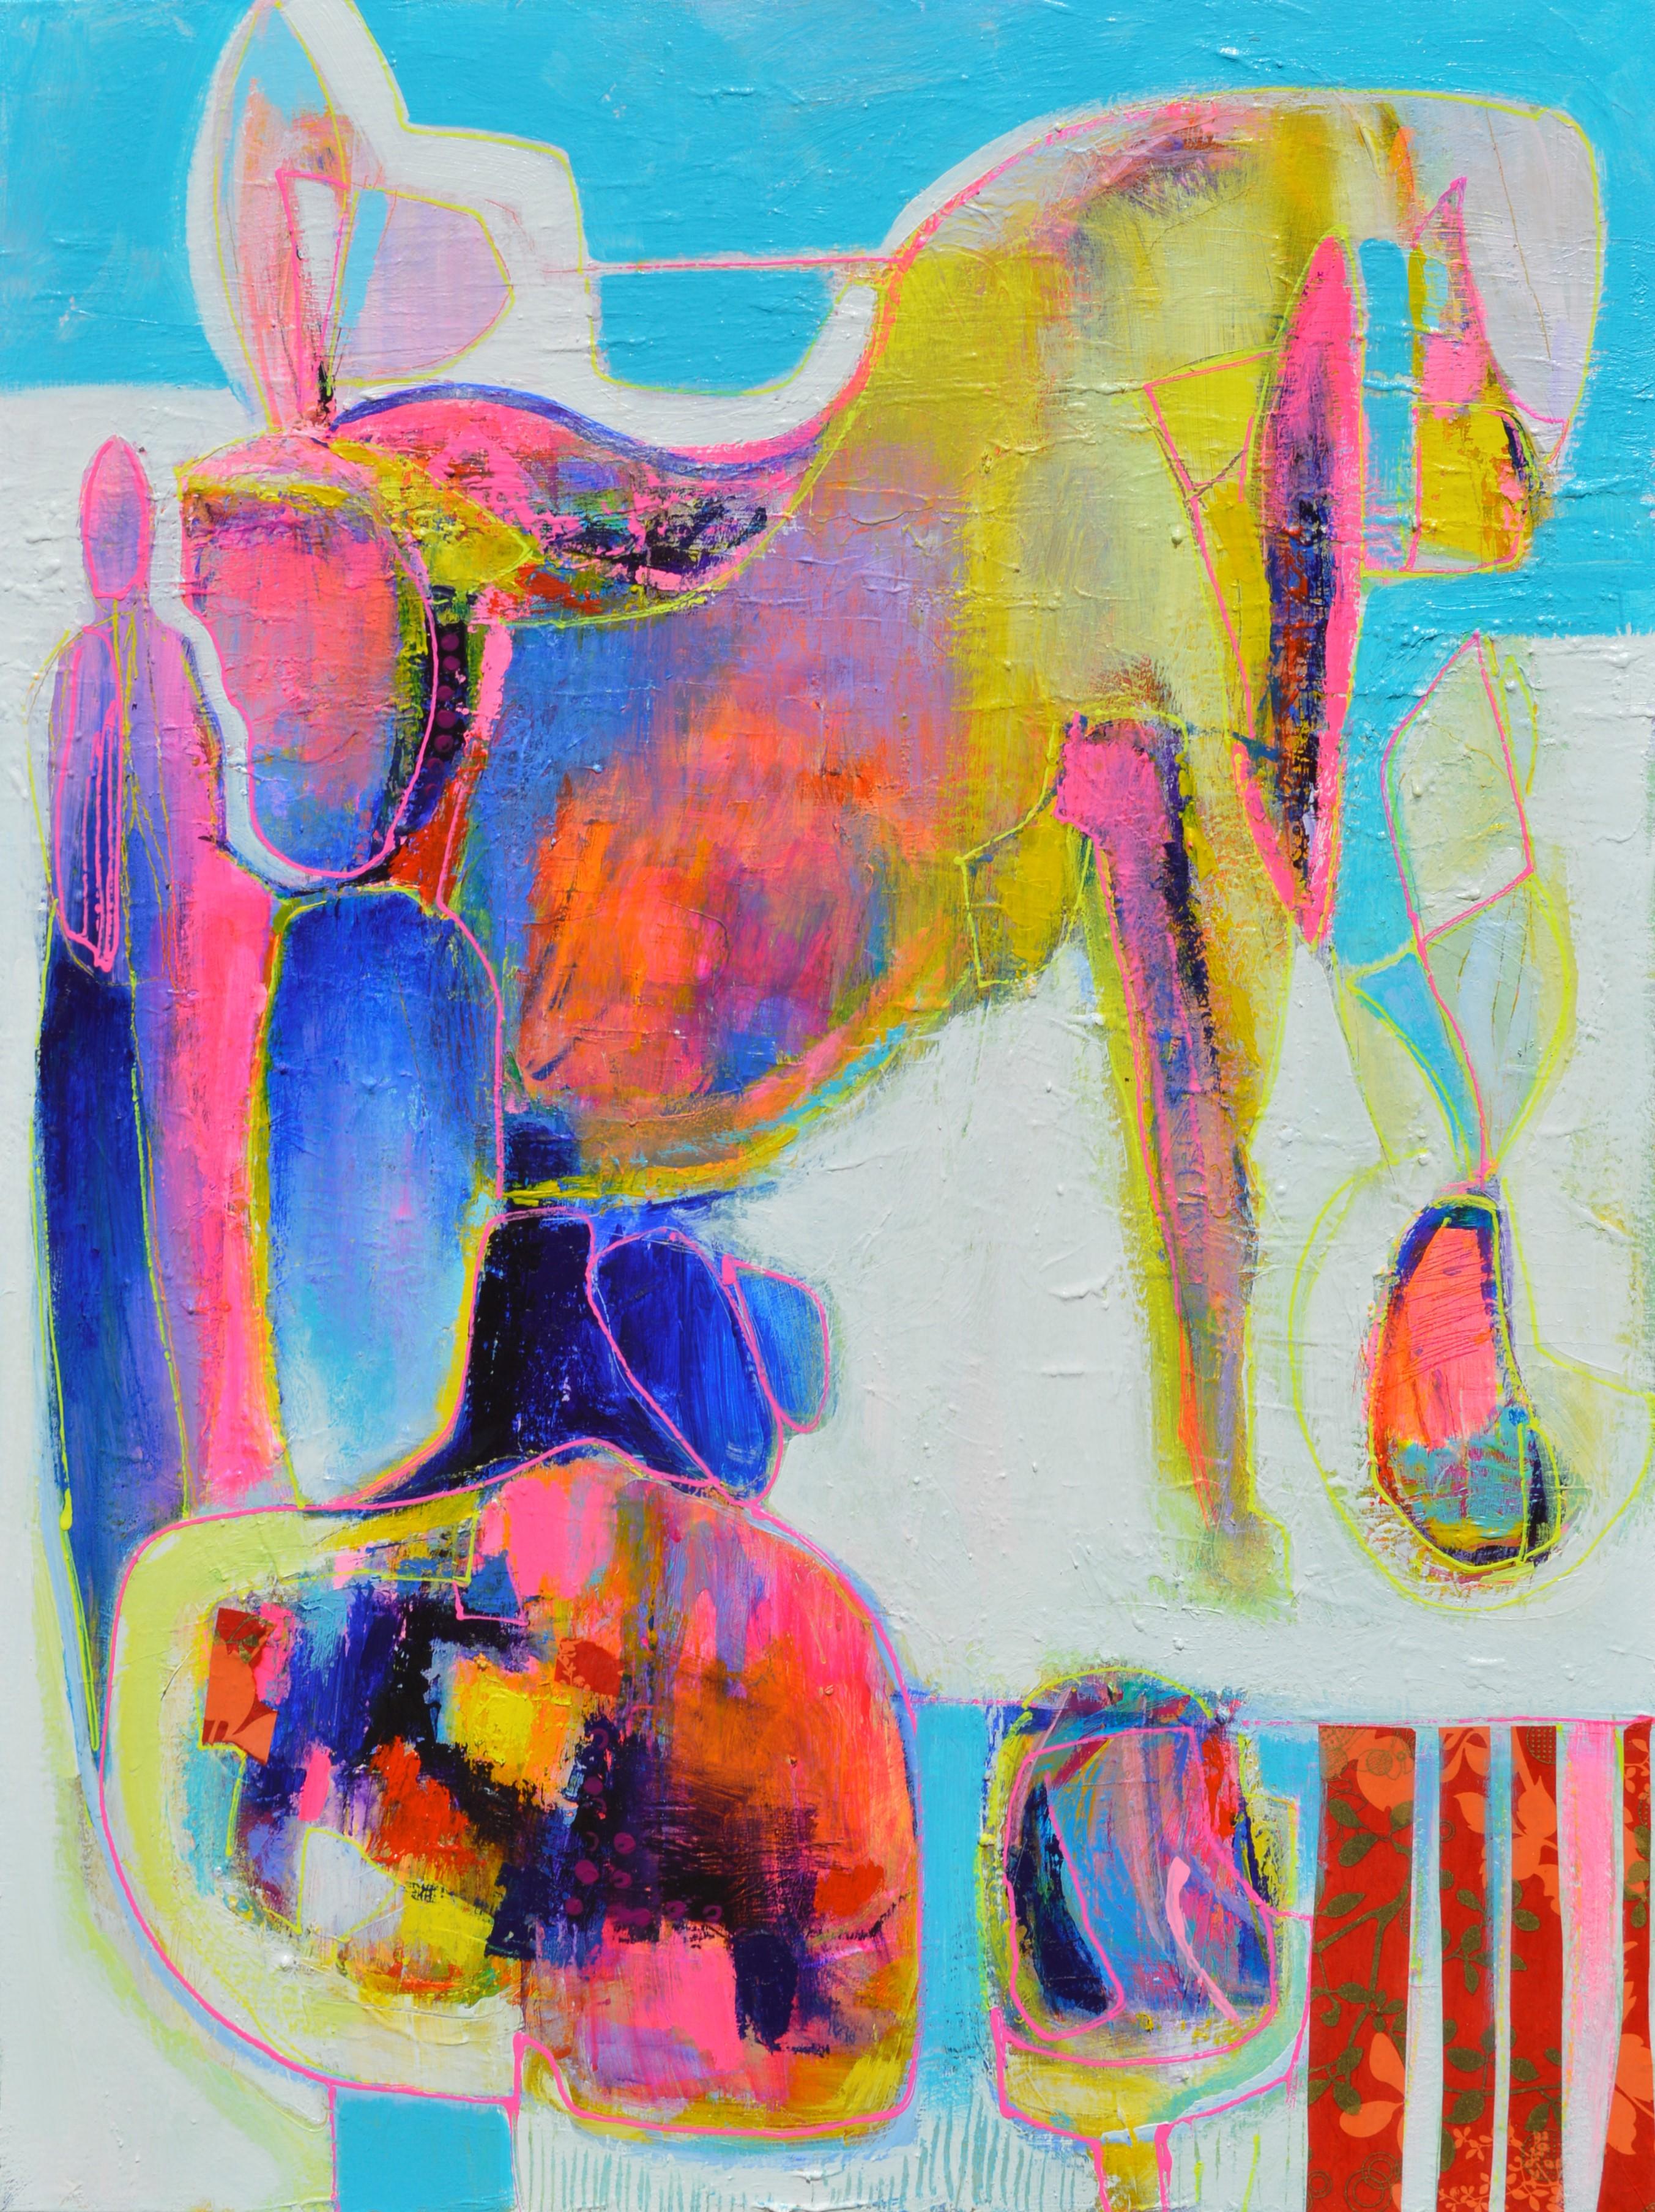 The Horse Traveler, Abstract Painting - Mixed Media Art by Patrick O'Boyle